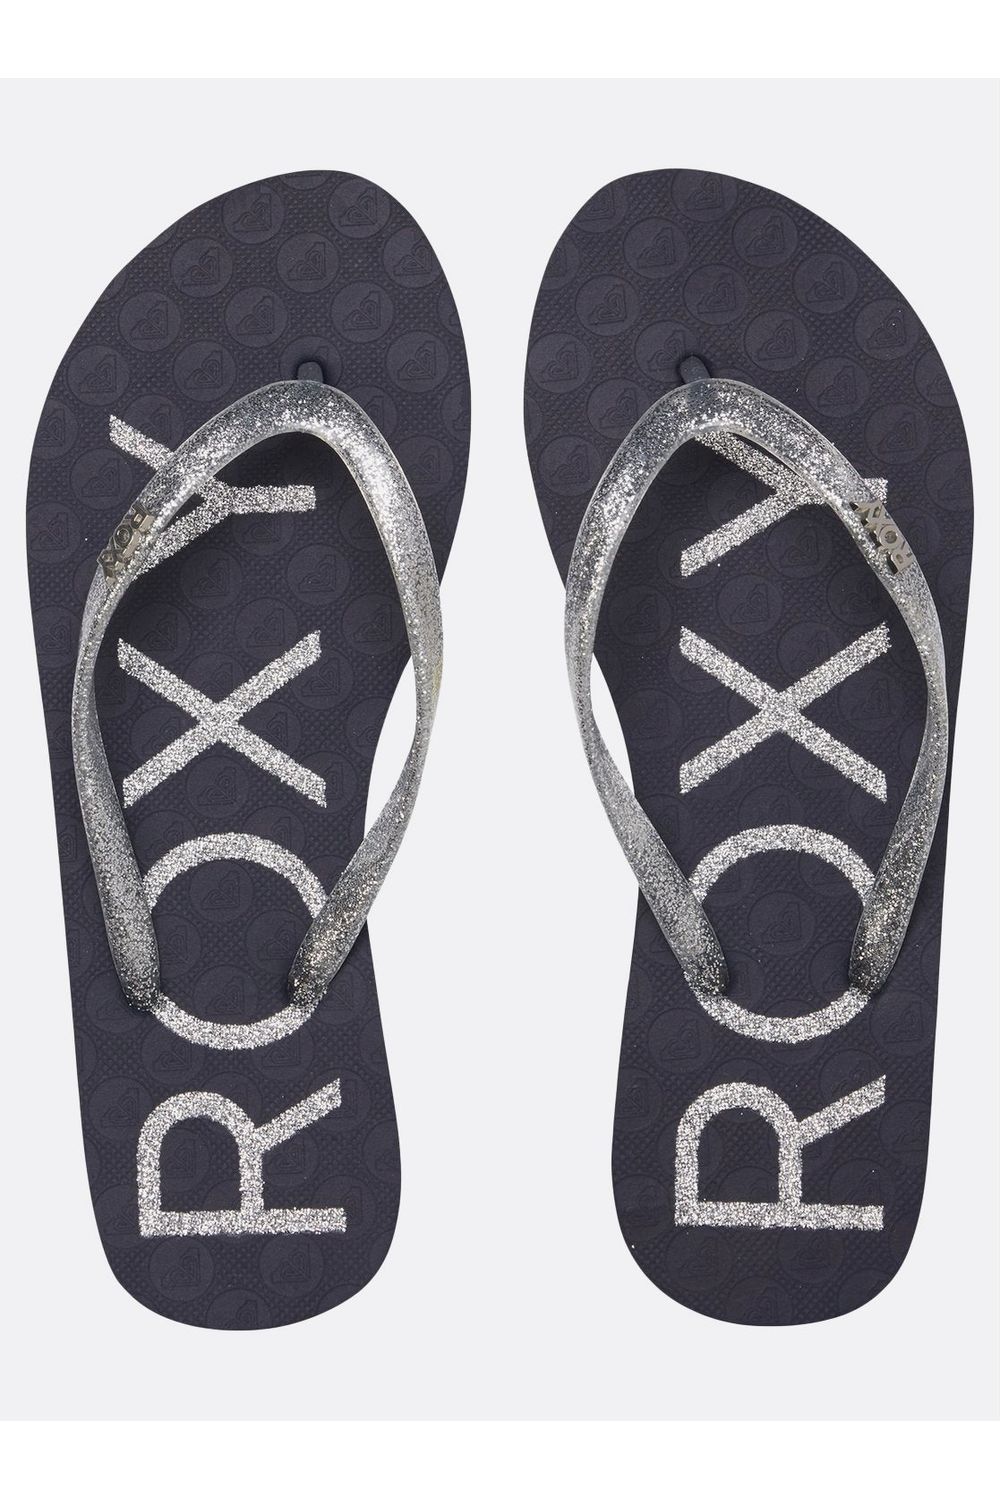 Roxy Viva Sparkle Sandals